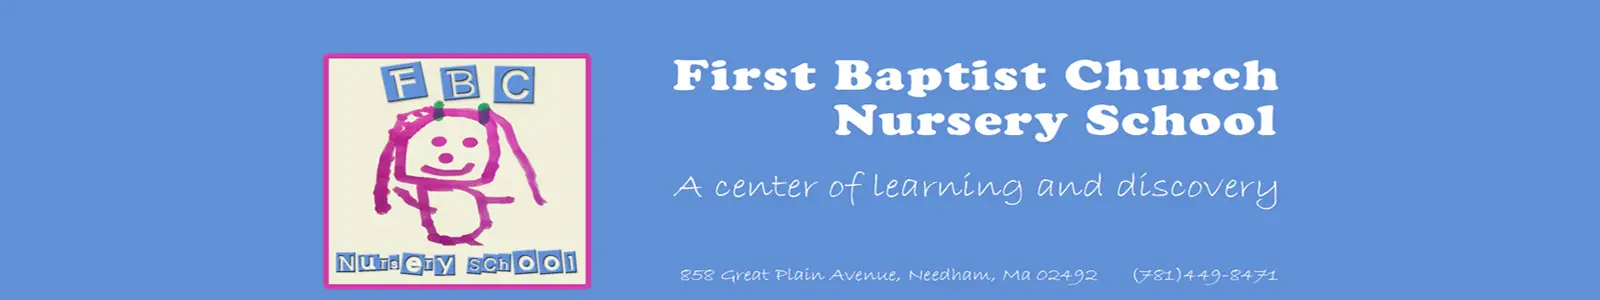 First Baptist Church Nursery School